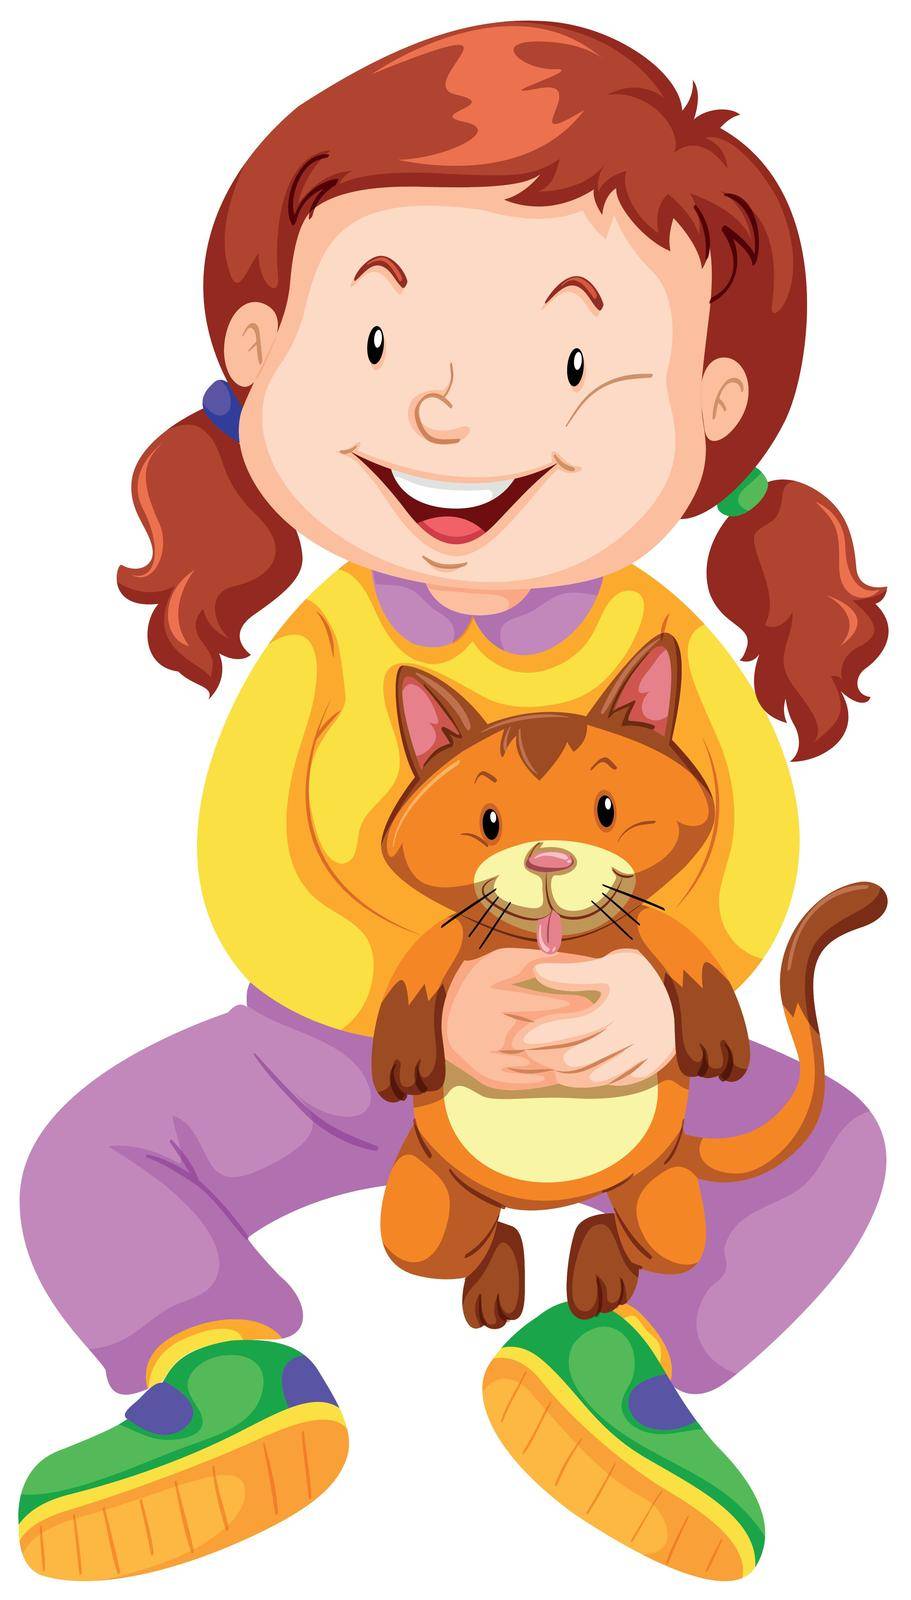 Little girl with pet cat illustration